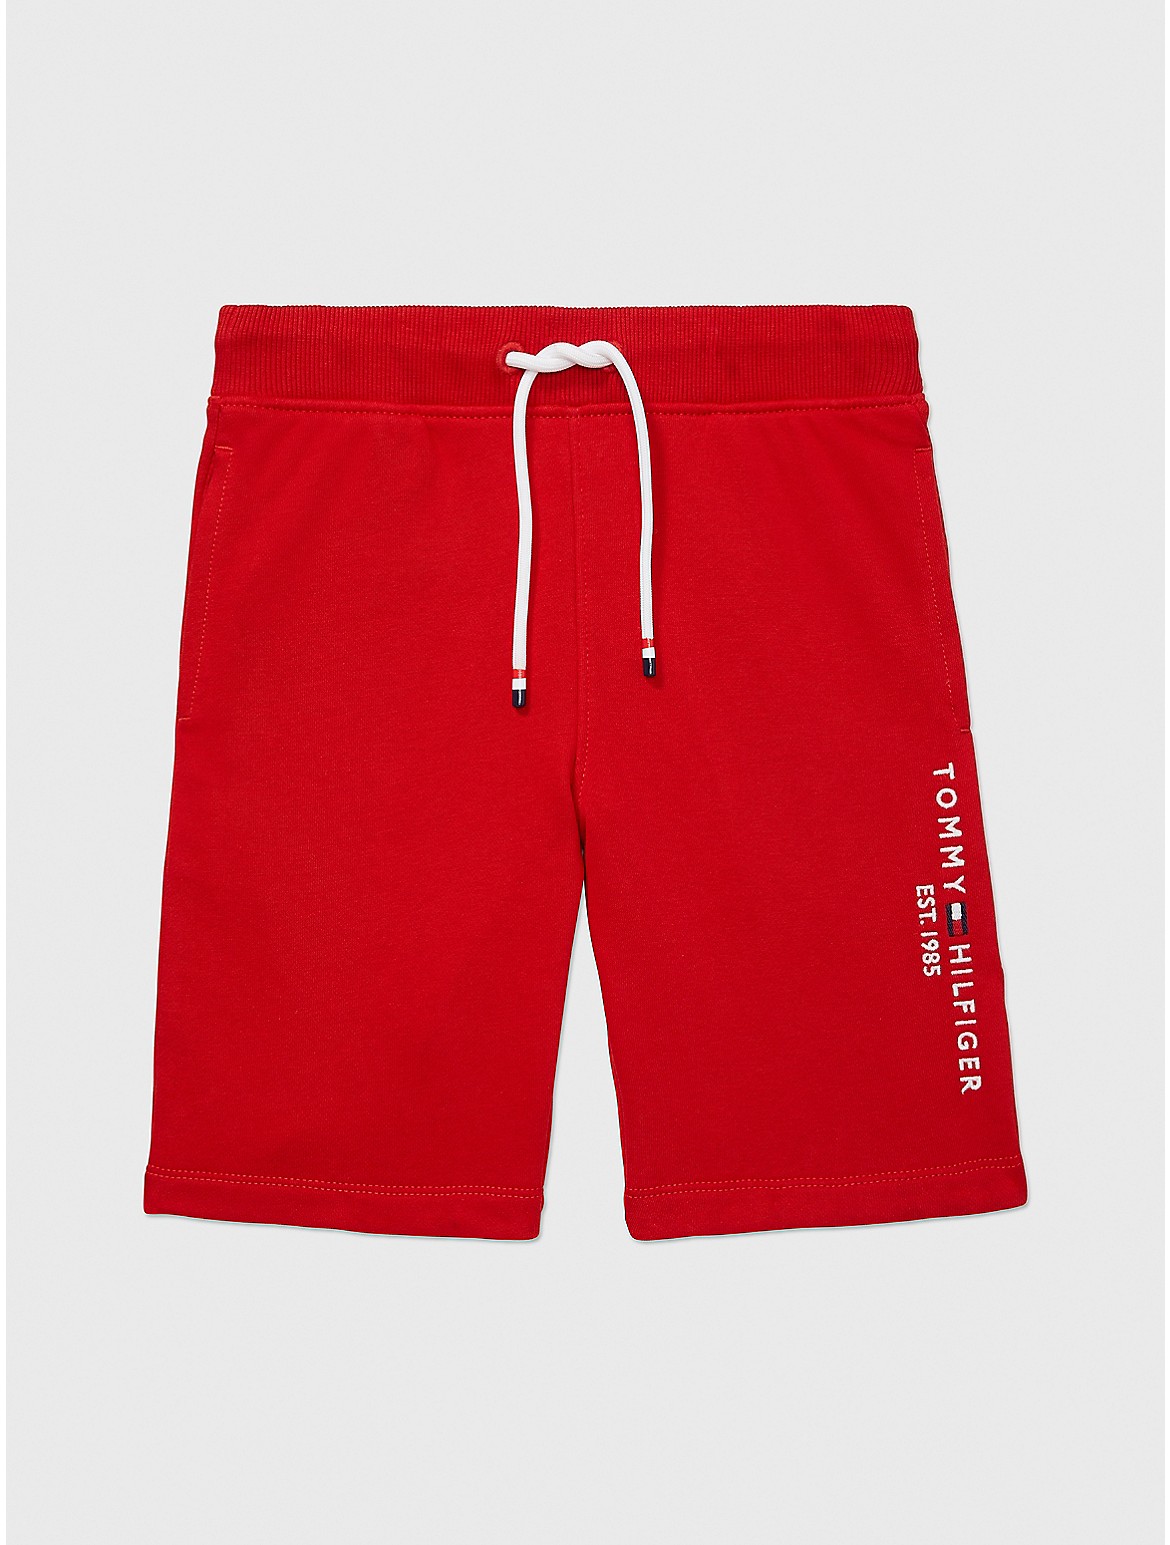 Tommy Hilfiger Boys' Logo Short - Red - L